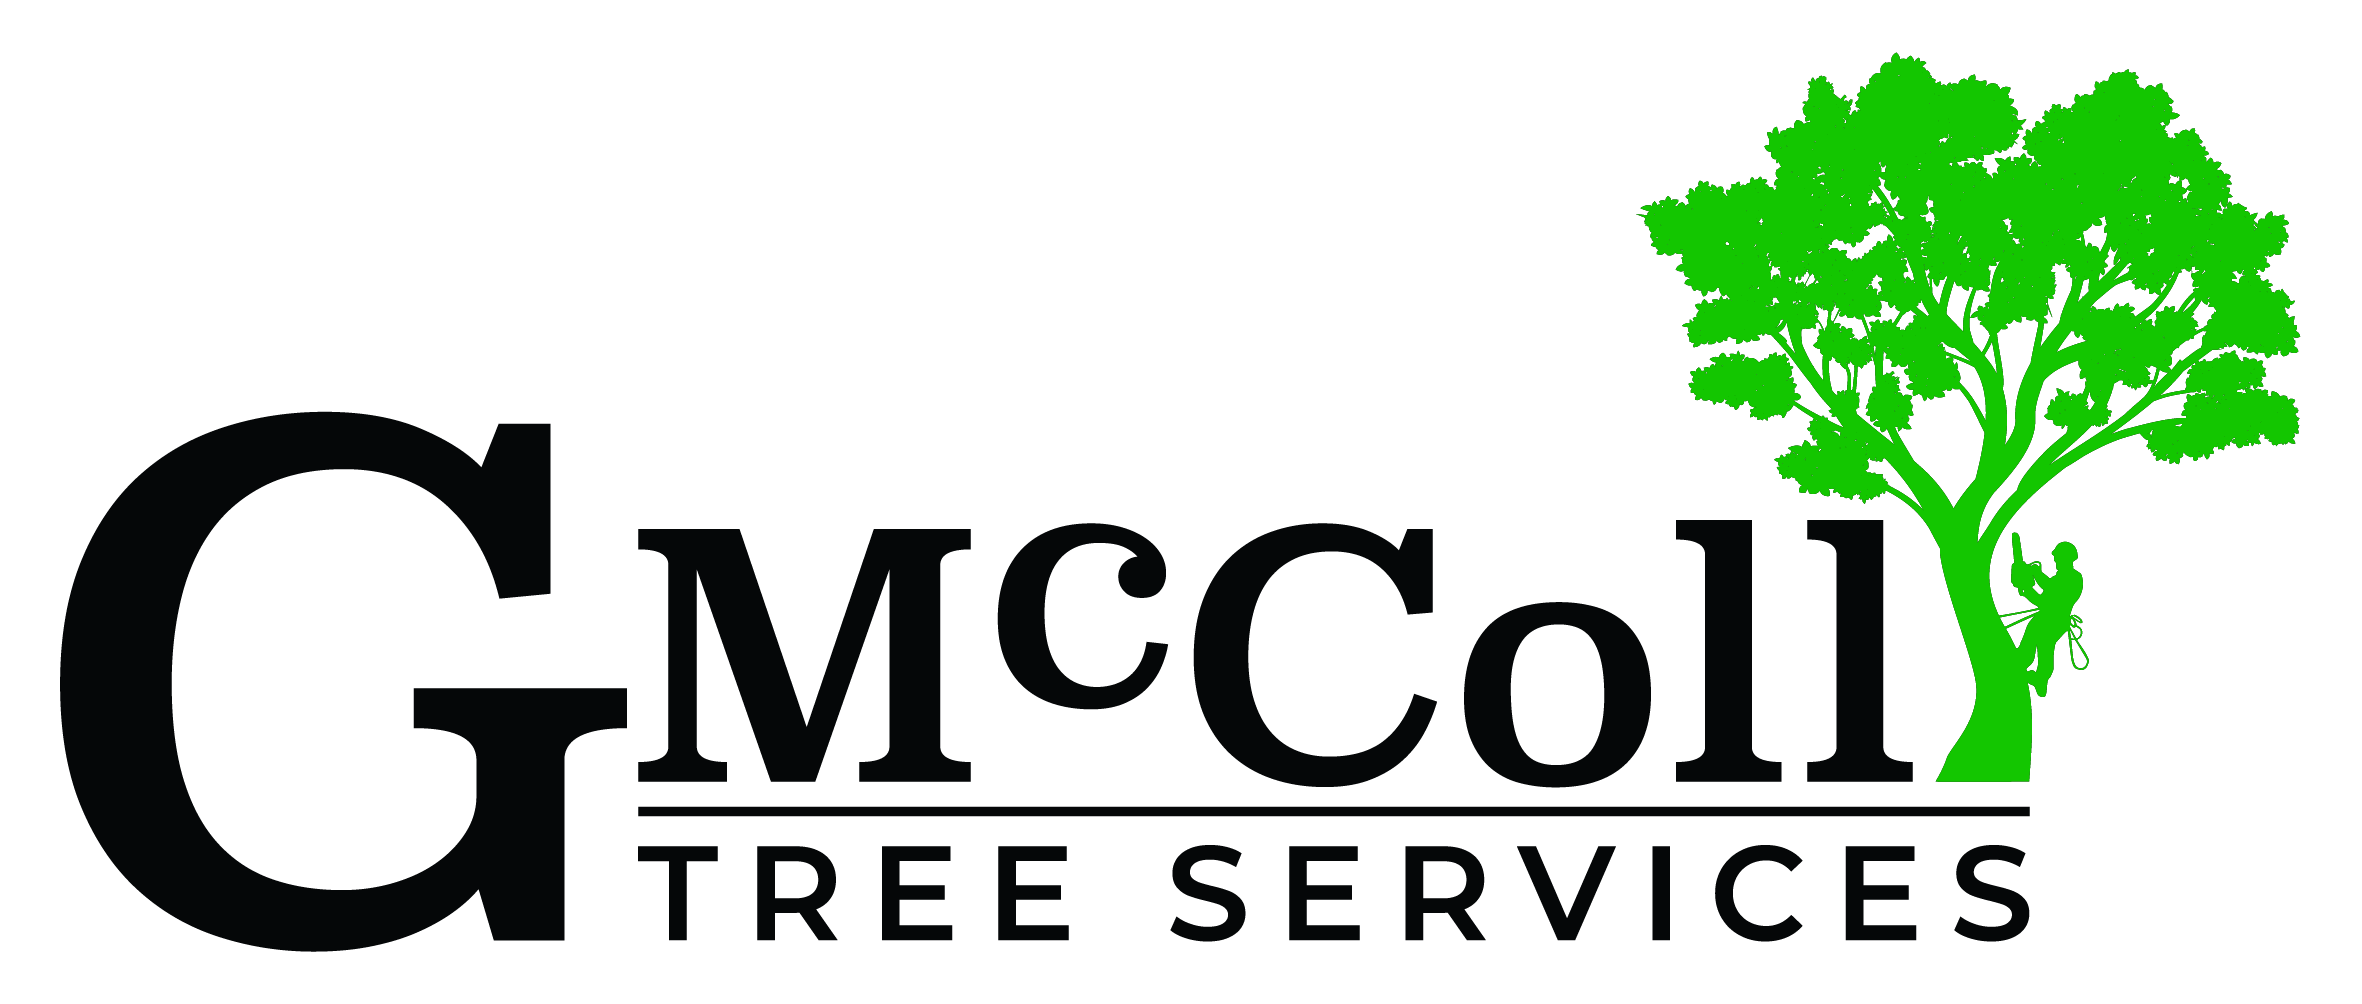 Tree Service Business Plan - Trait Carre